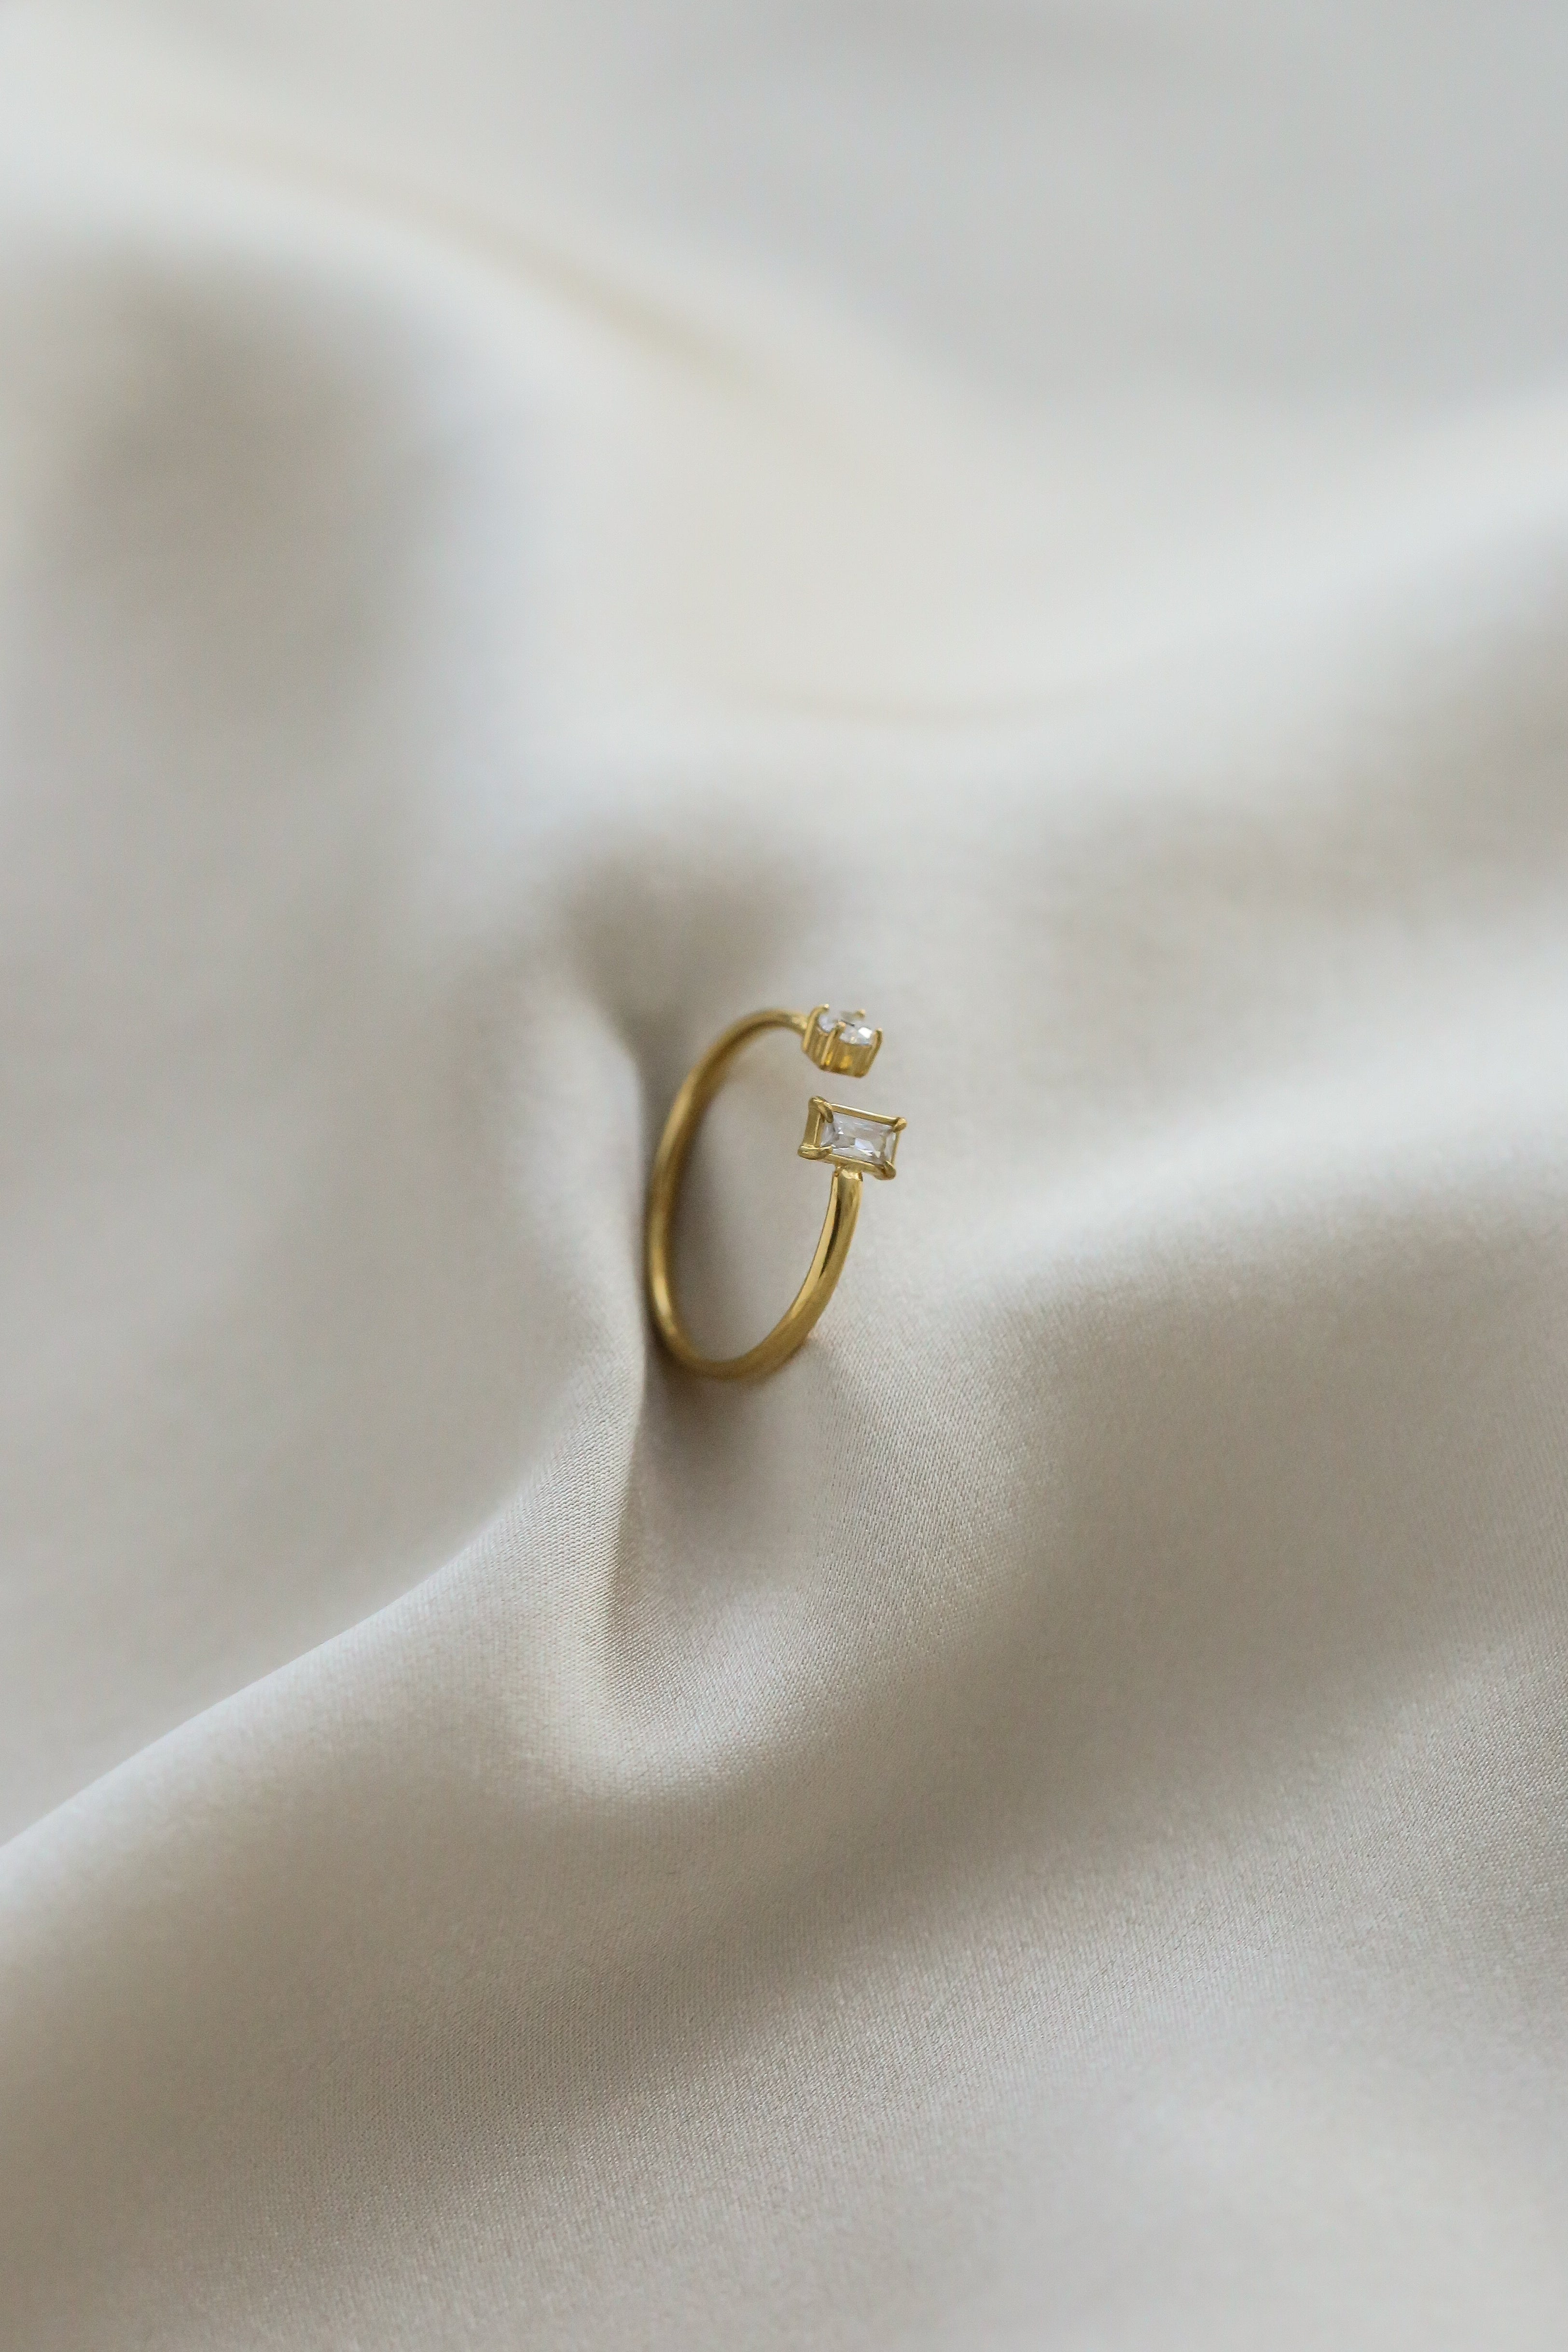 Vivienne Ring - Boutique Minimaliste has waterproof, durable, elegant and vintage inspired jewelry